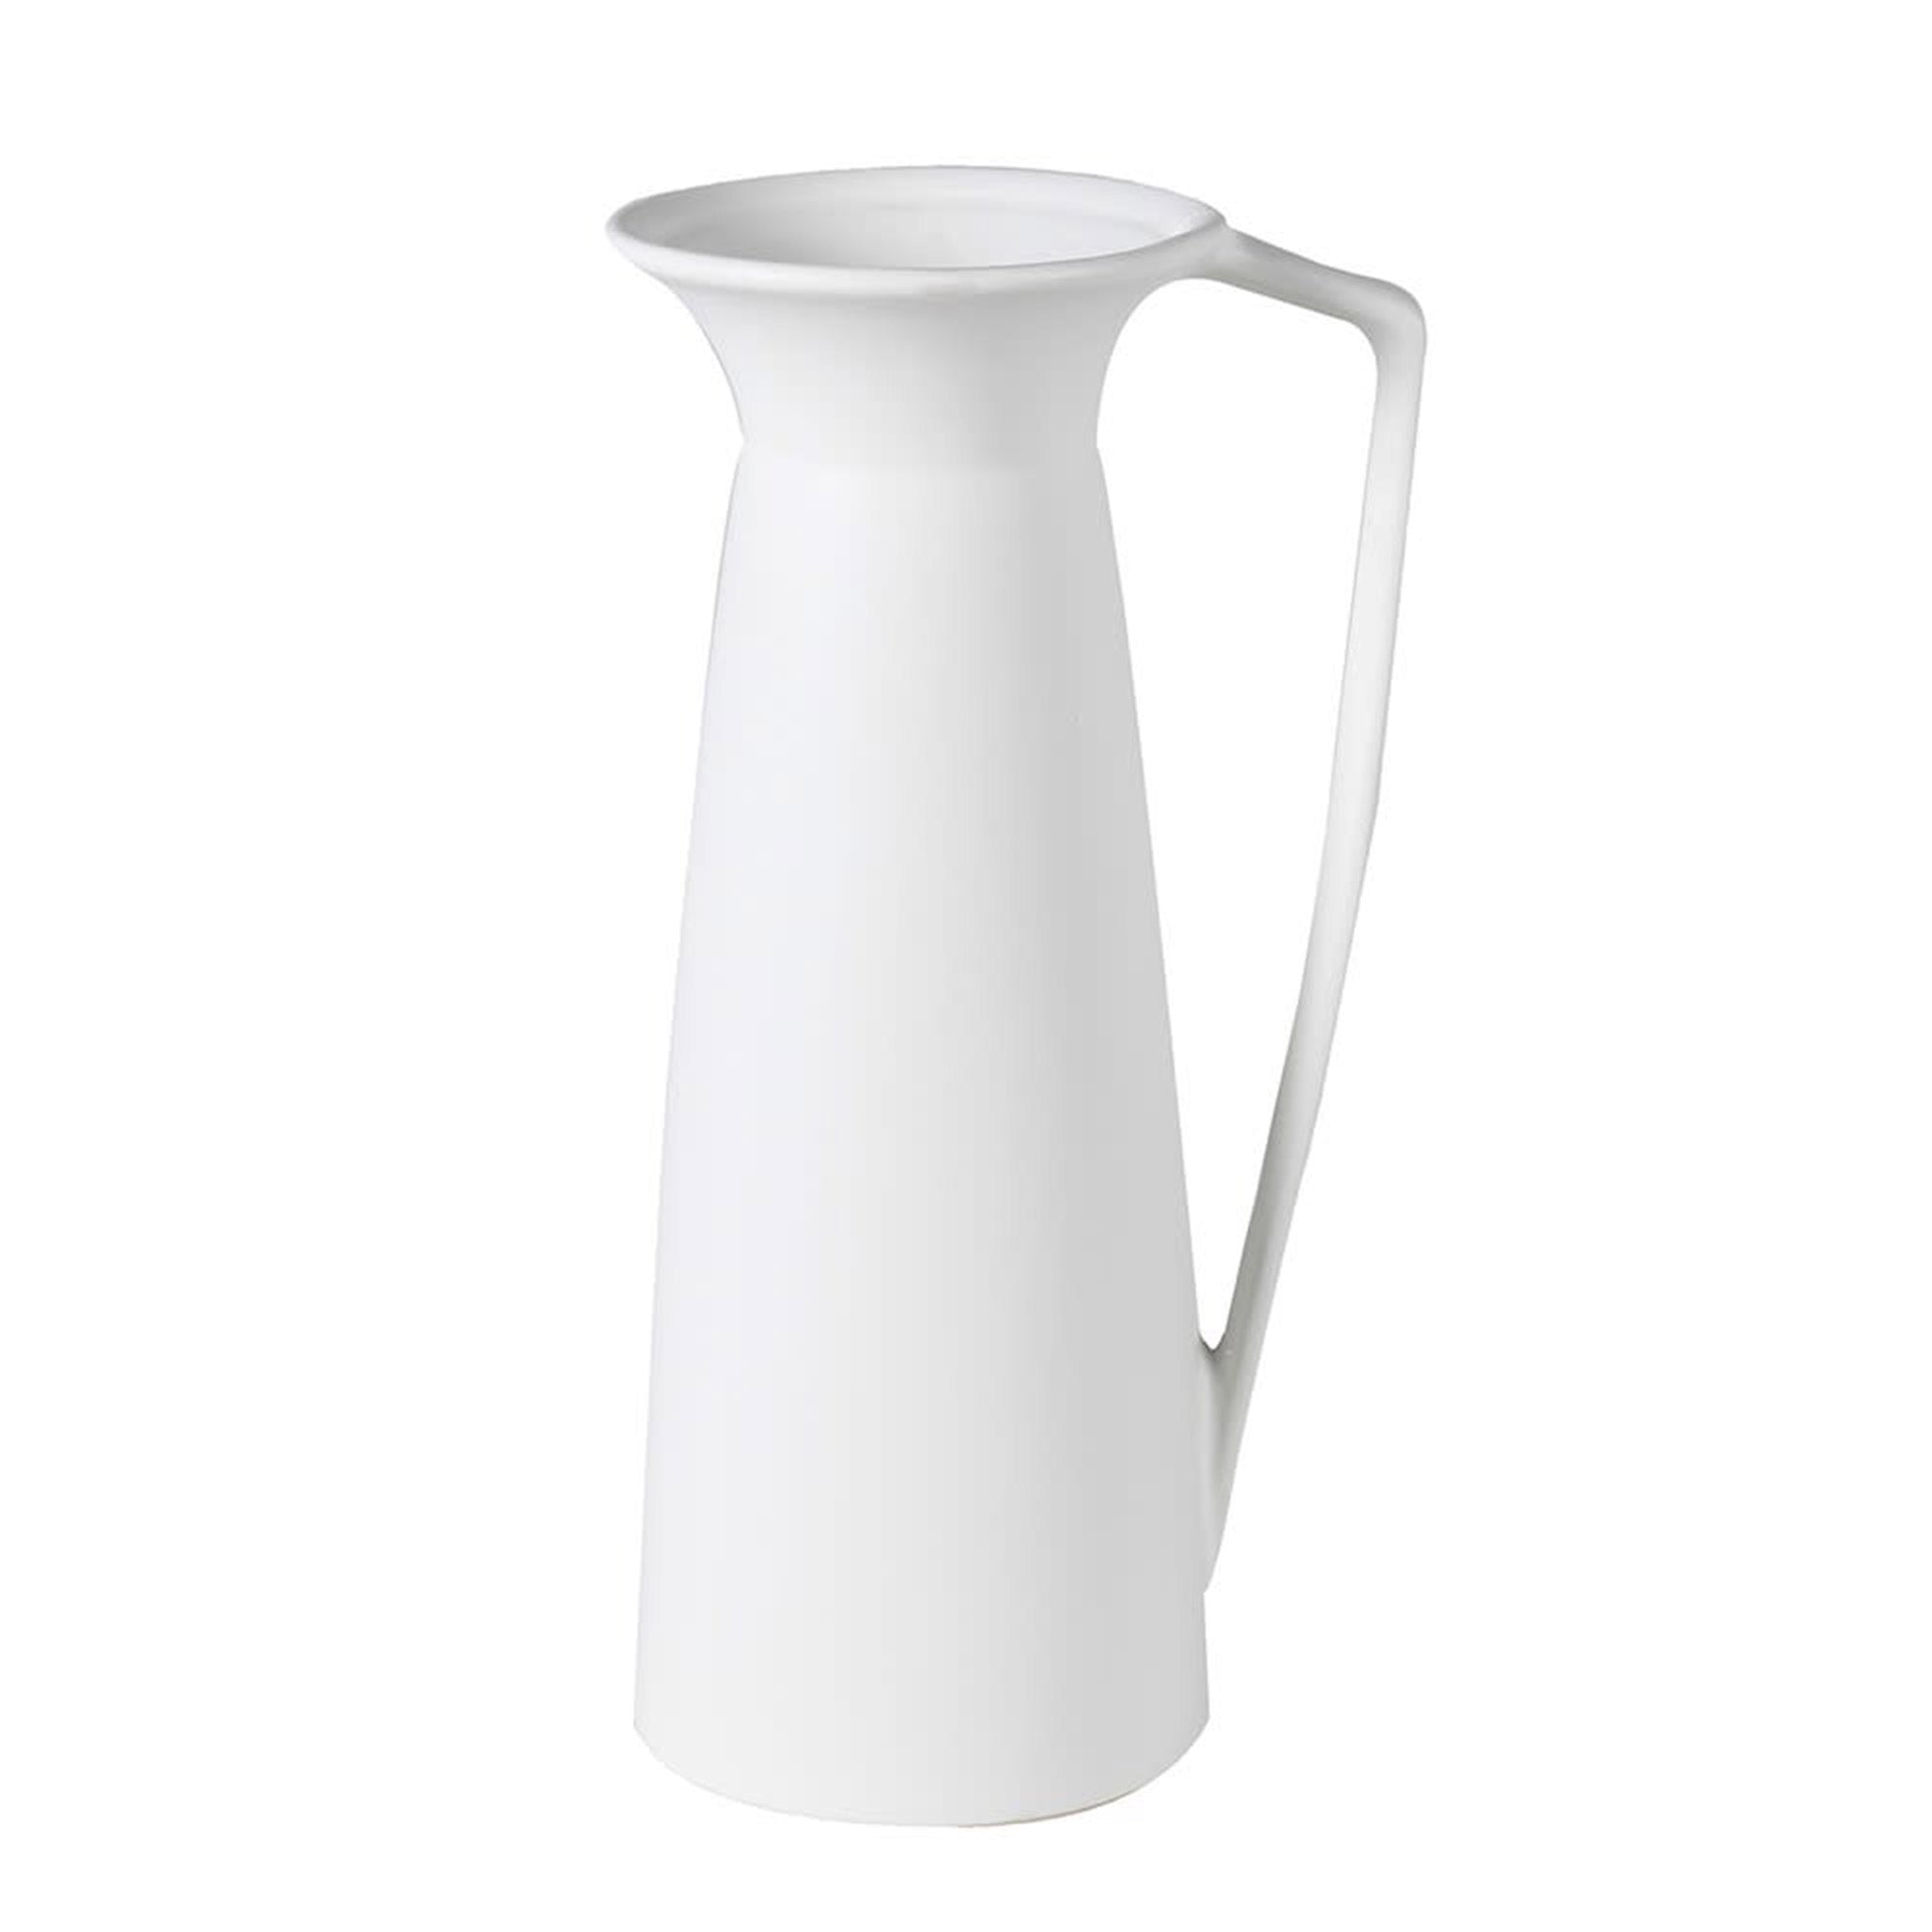 Jug/Vase White - Medium